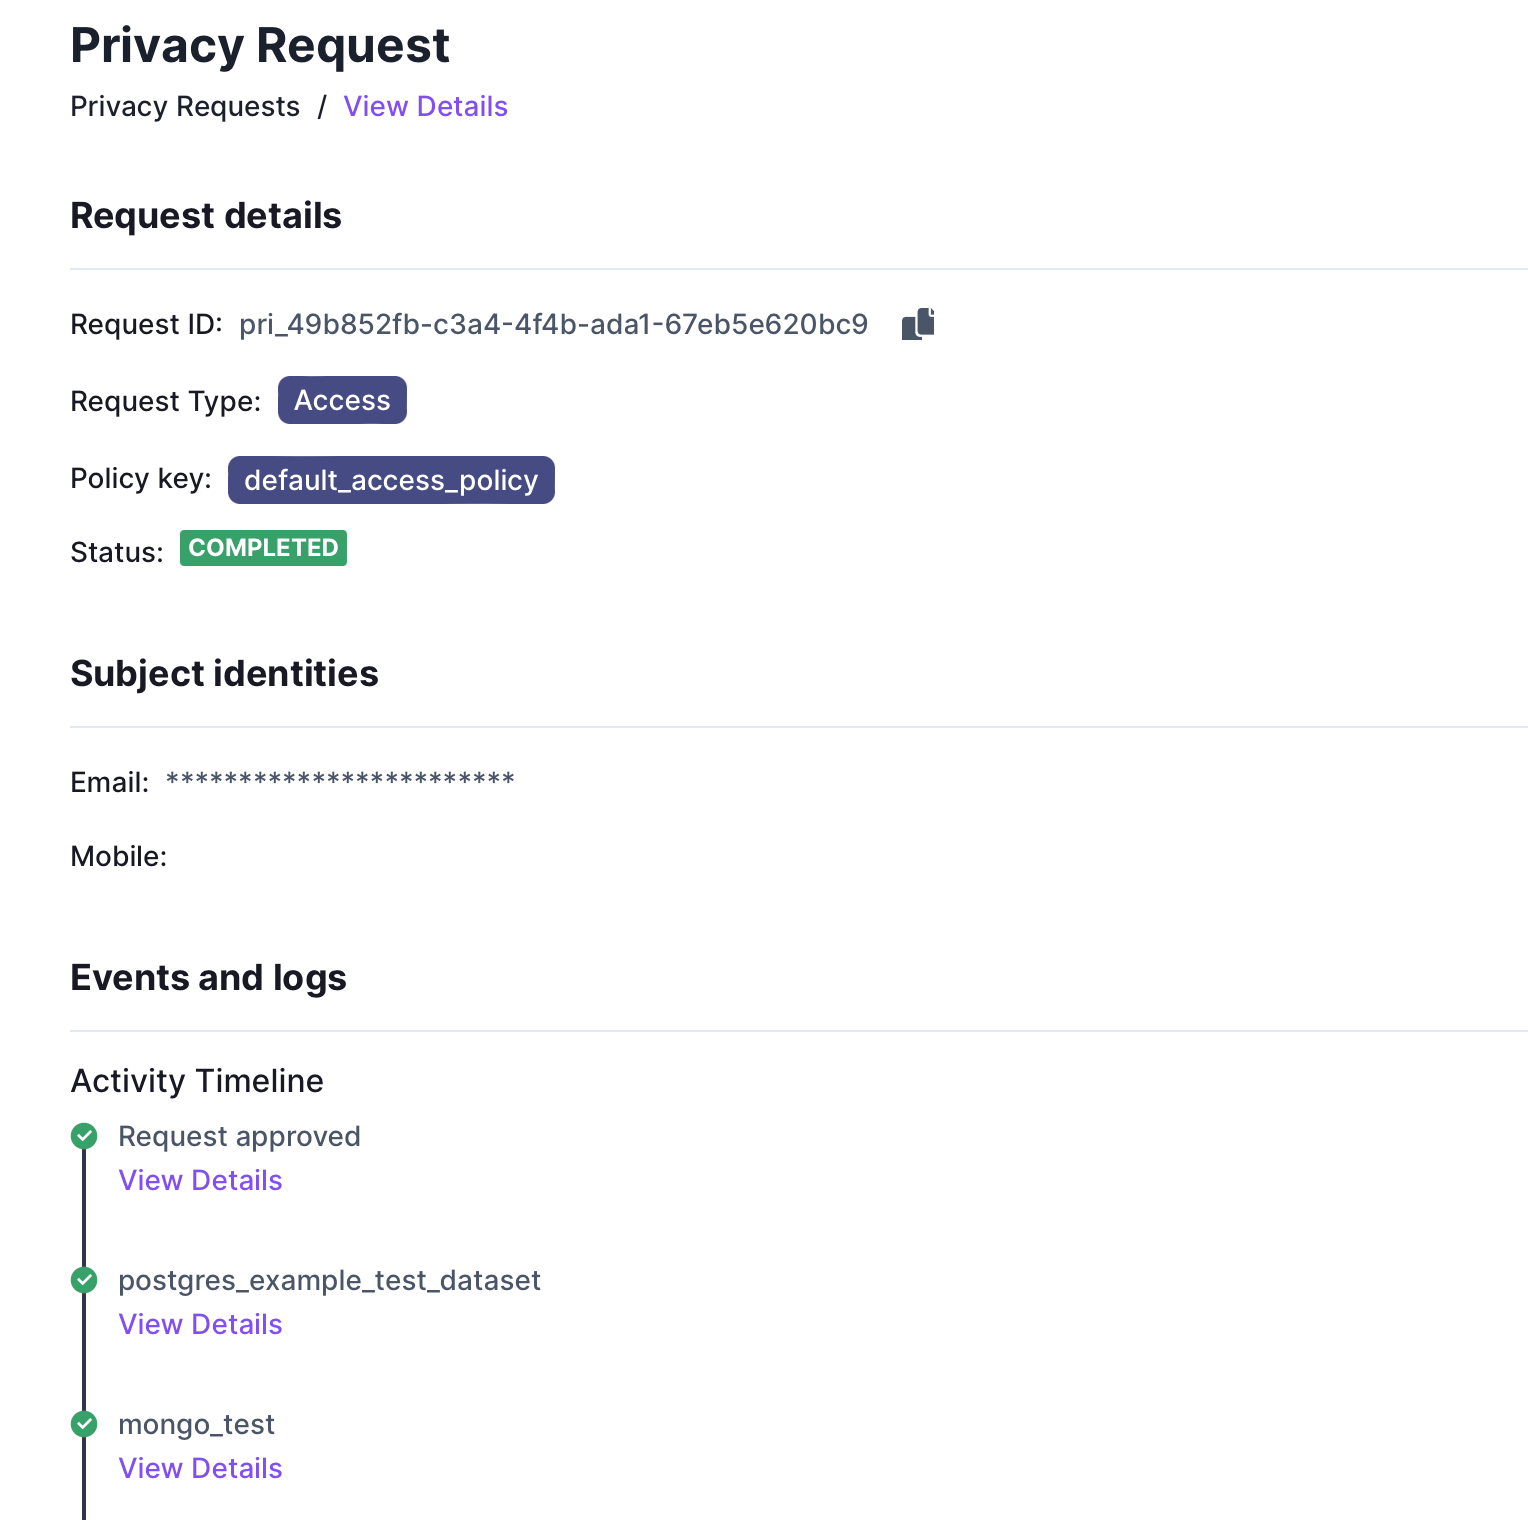 Privacy Request Logs